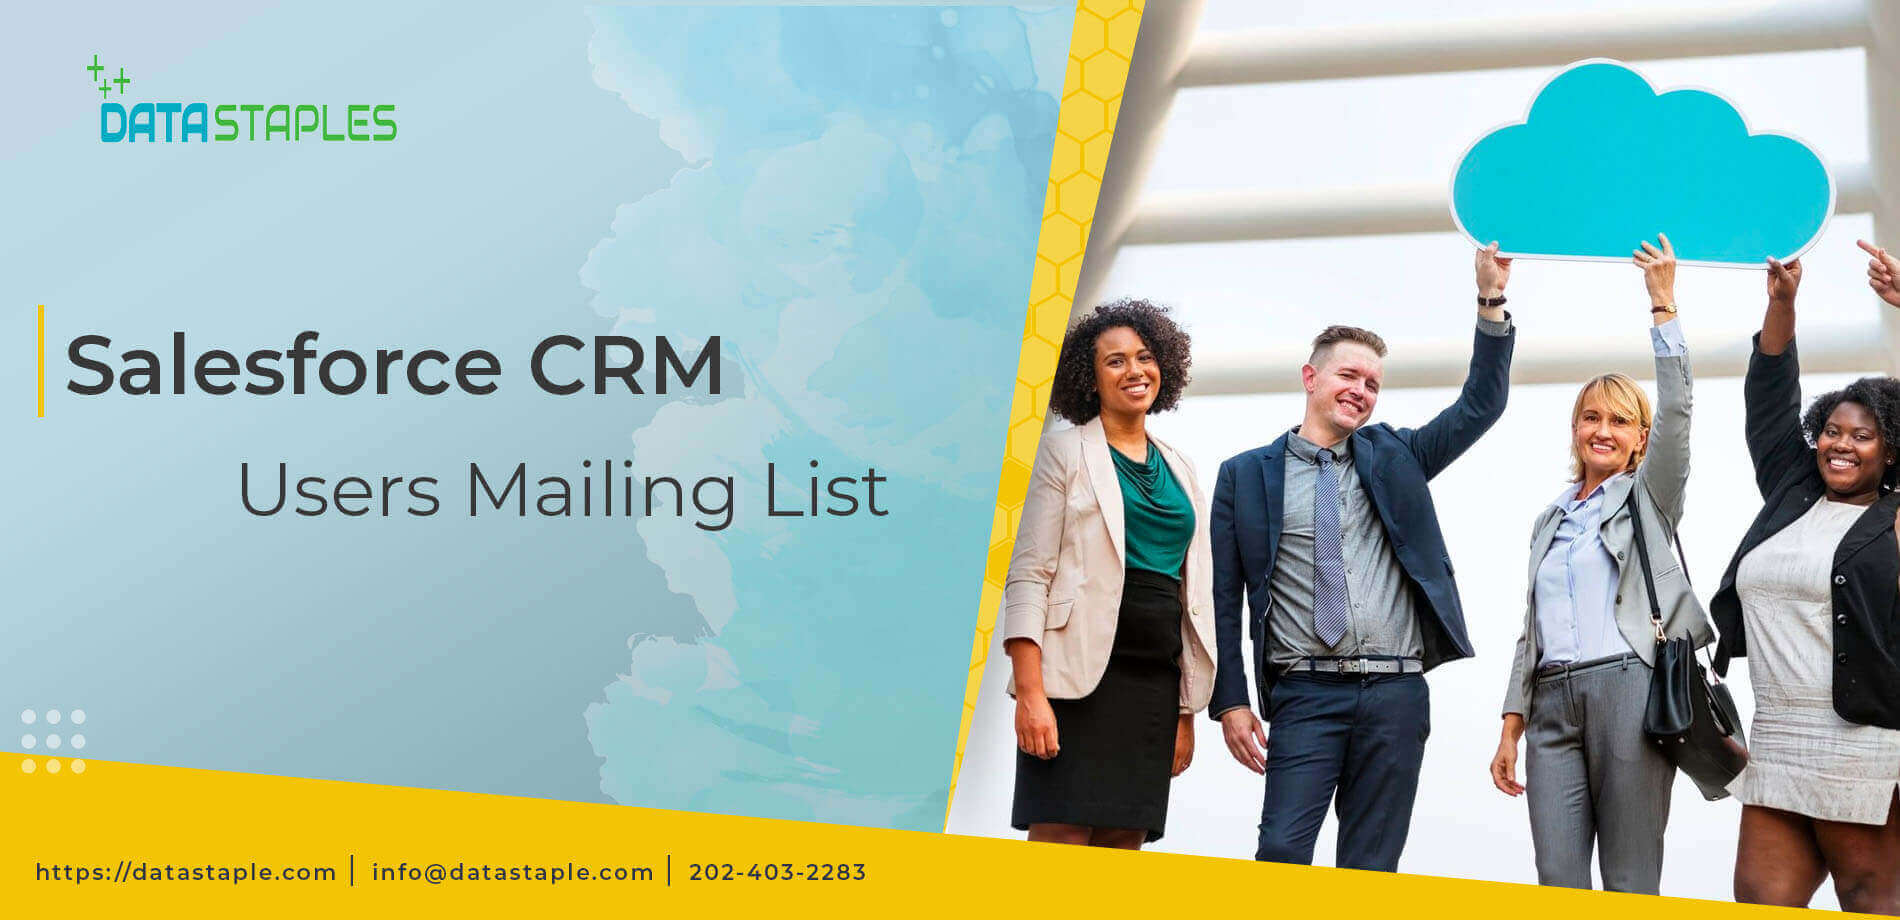 Salesforce CRM Users Mailing List | DataStaples